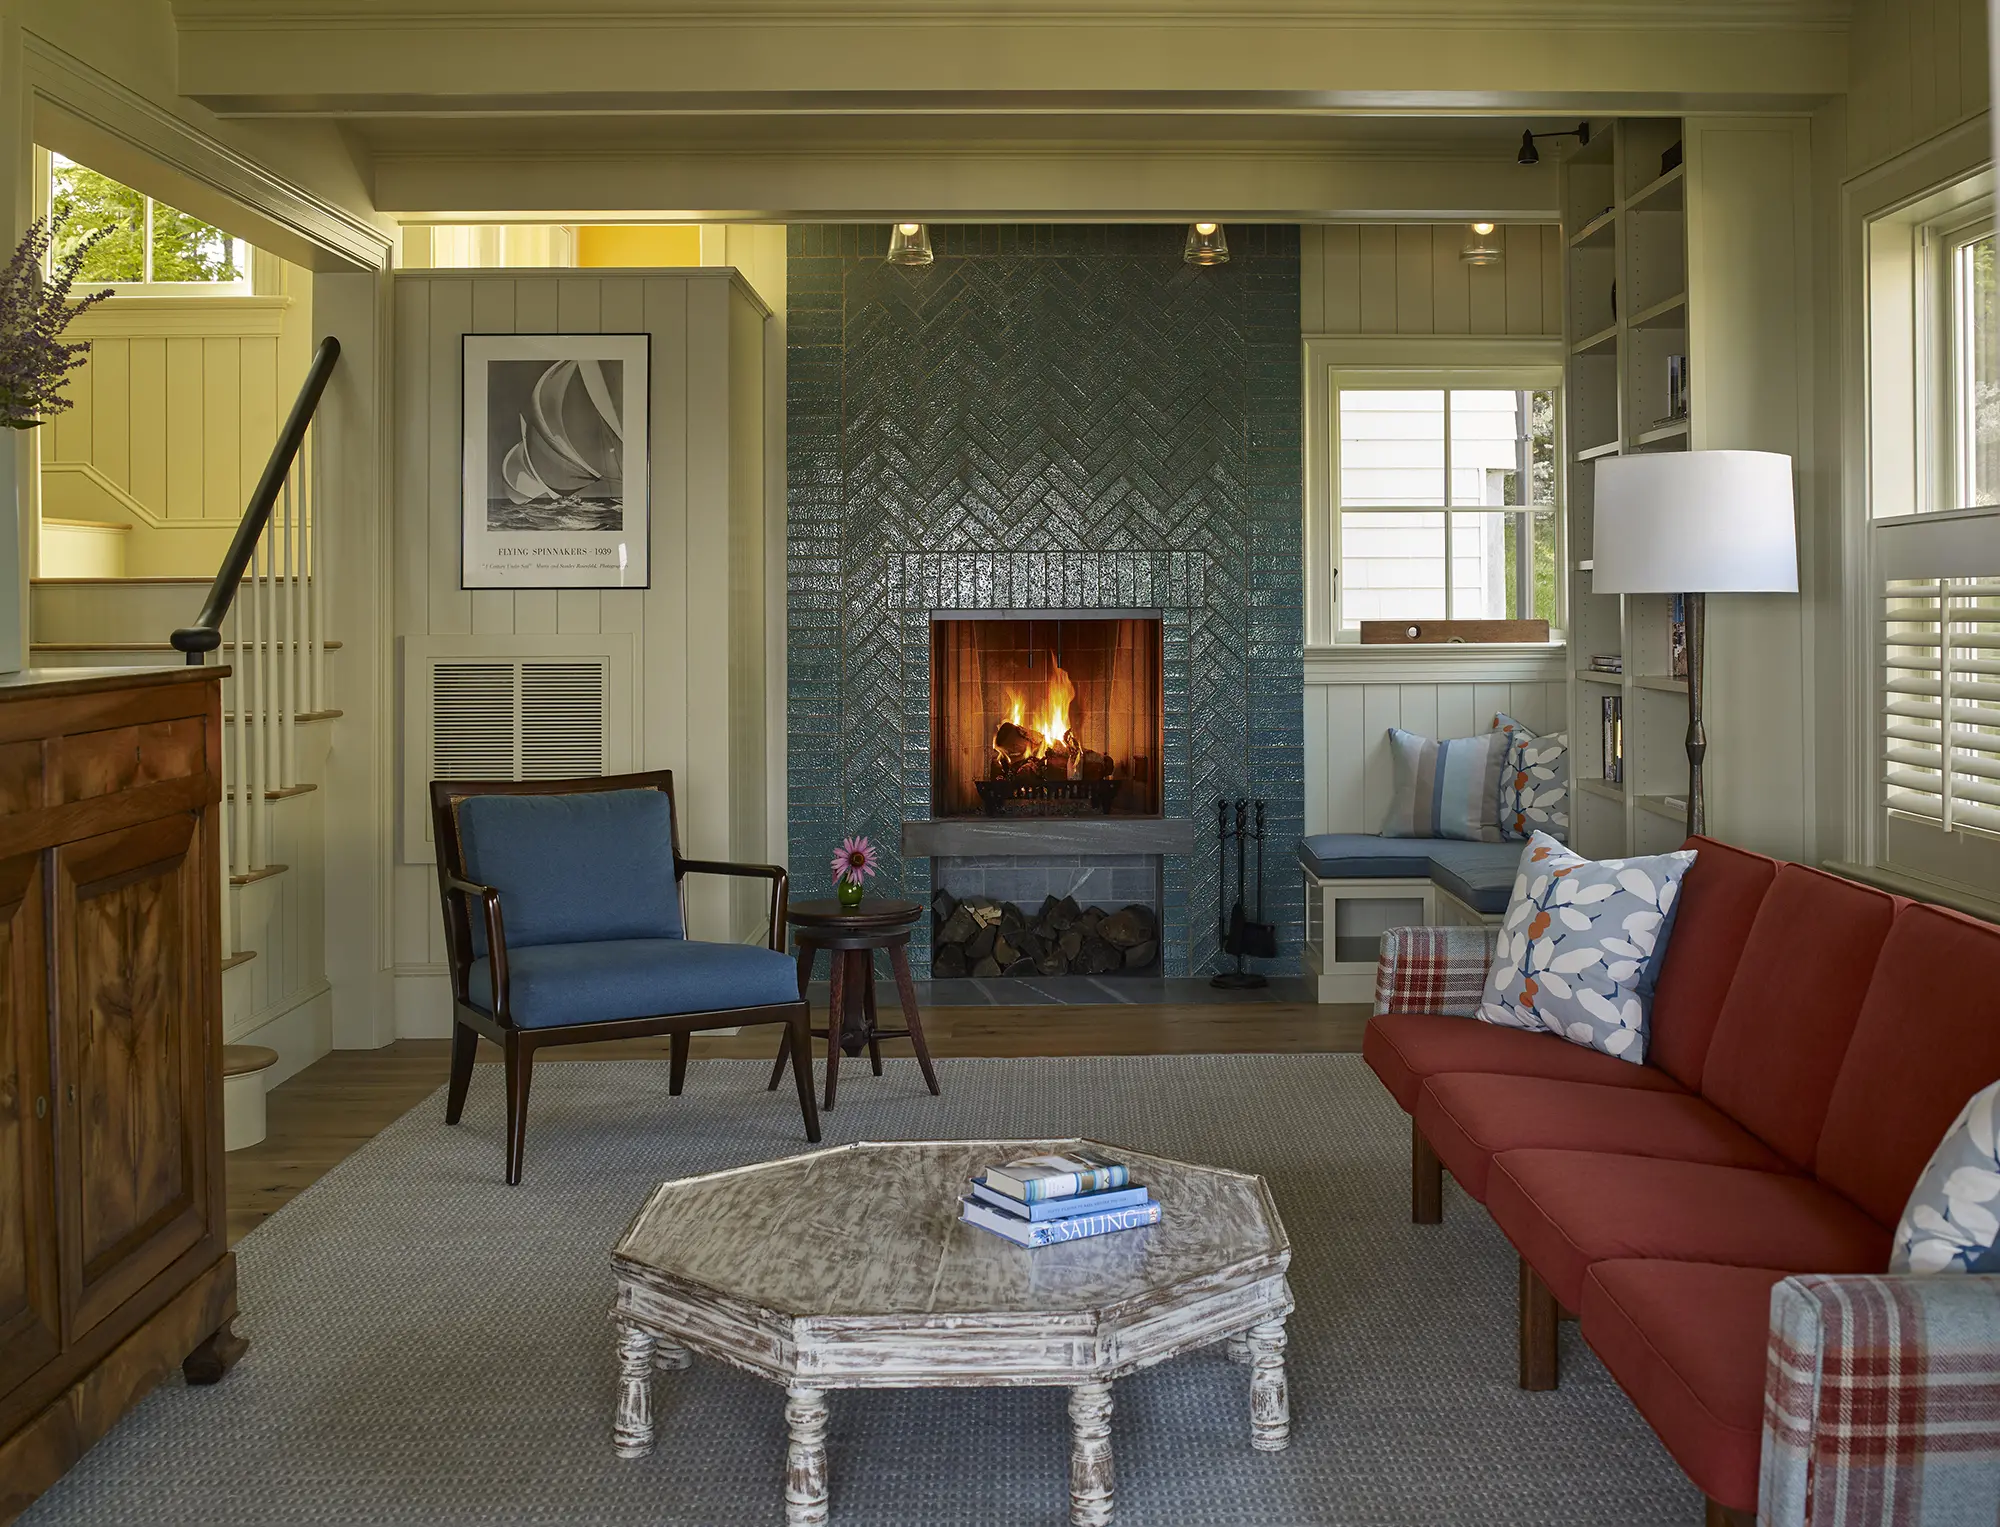 Cozy sitting area with a herringbone brick fireplace